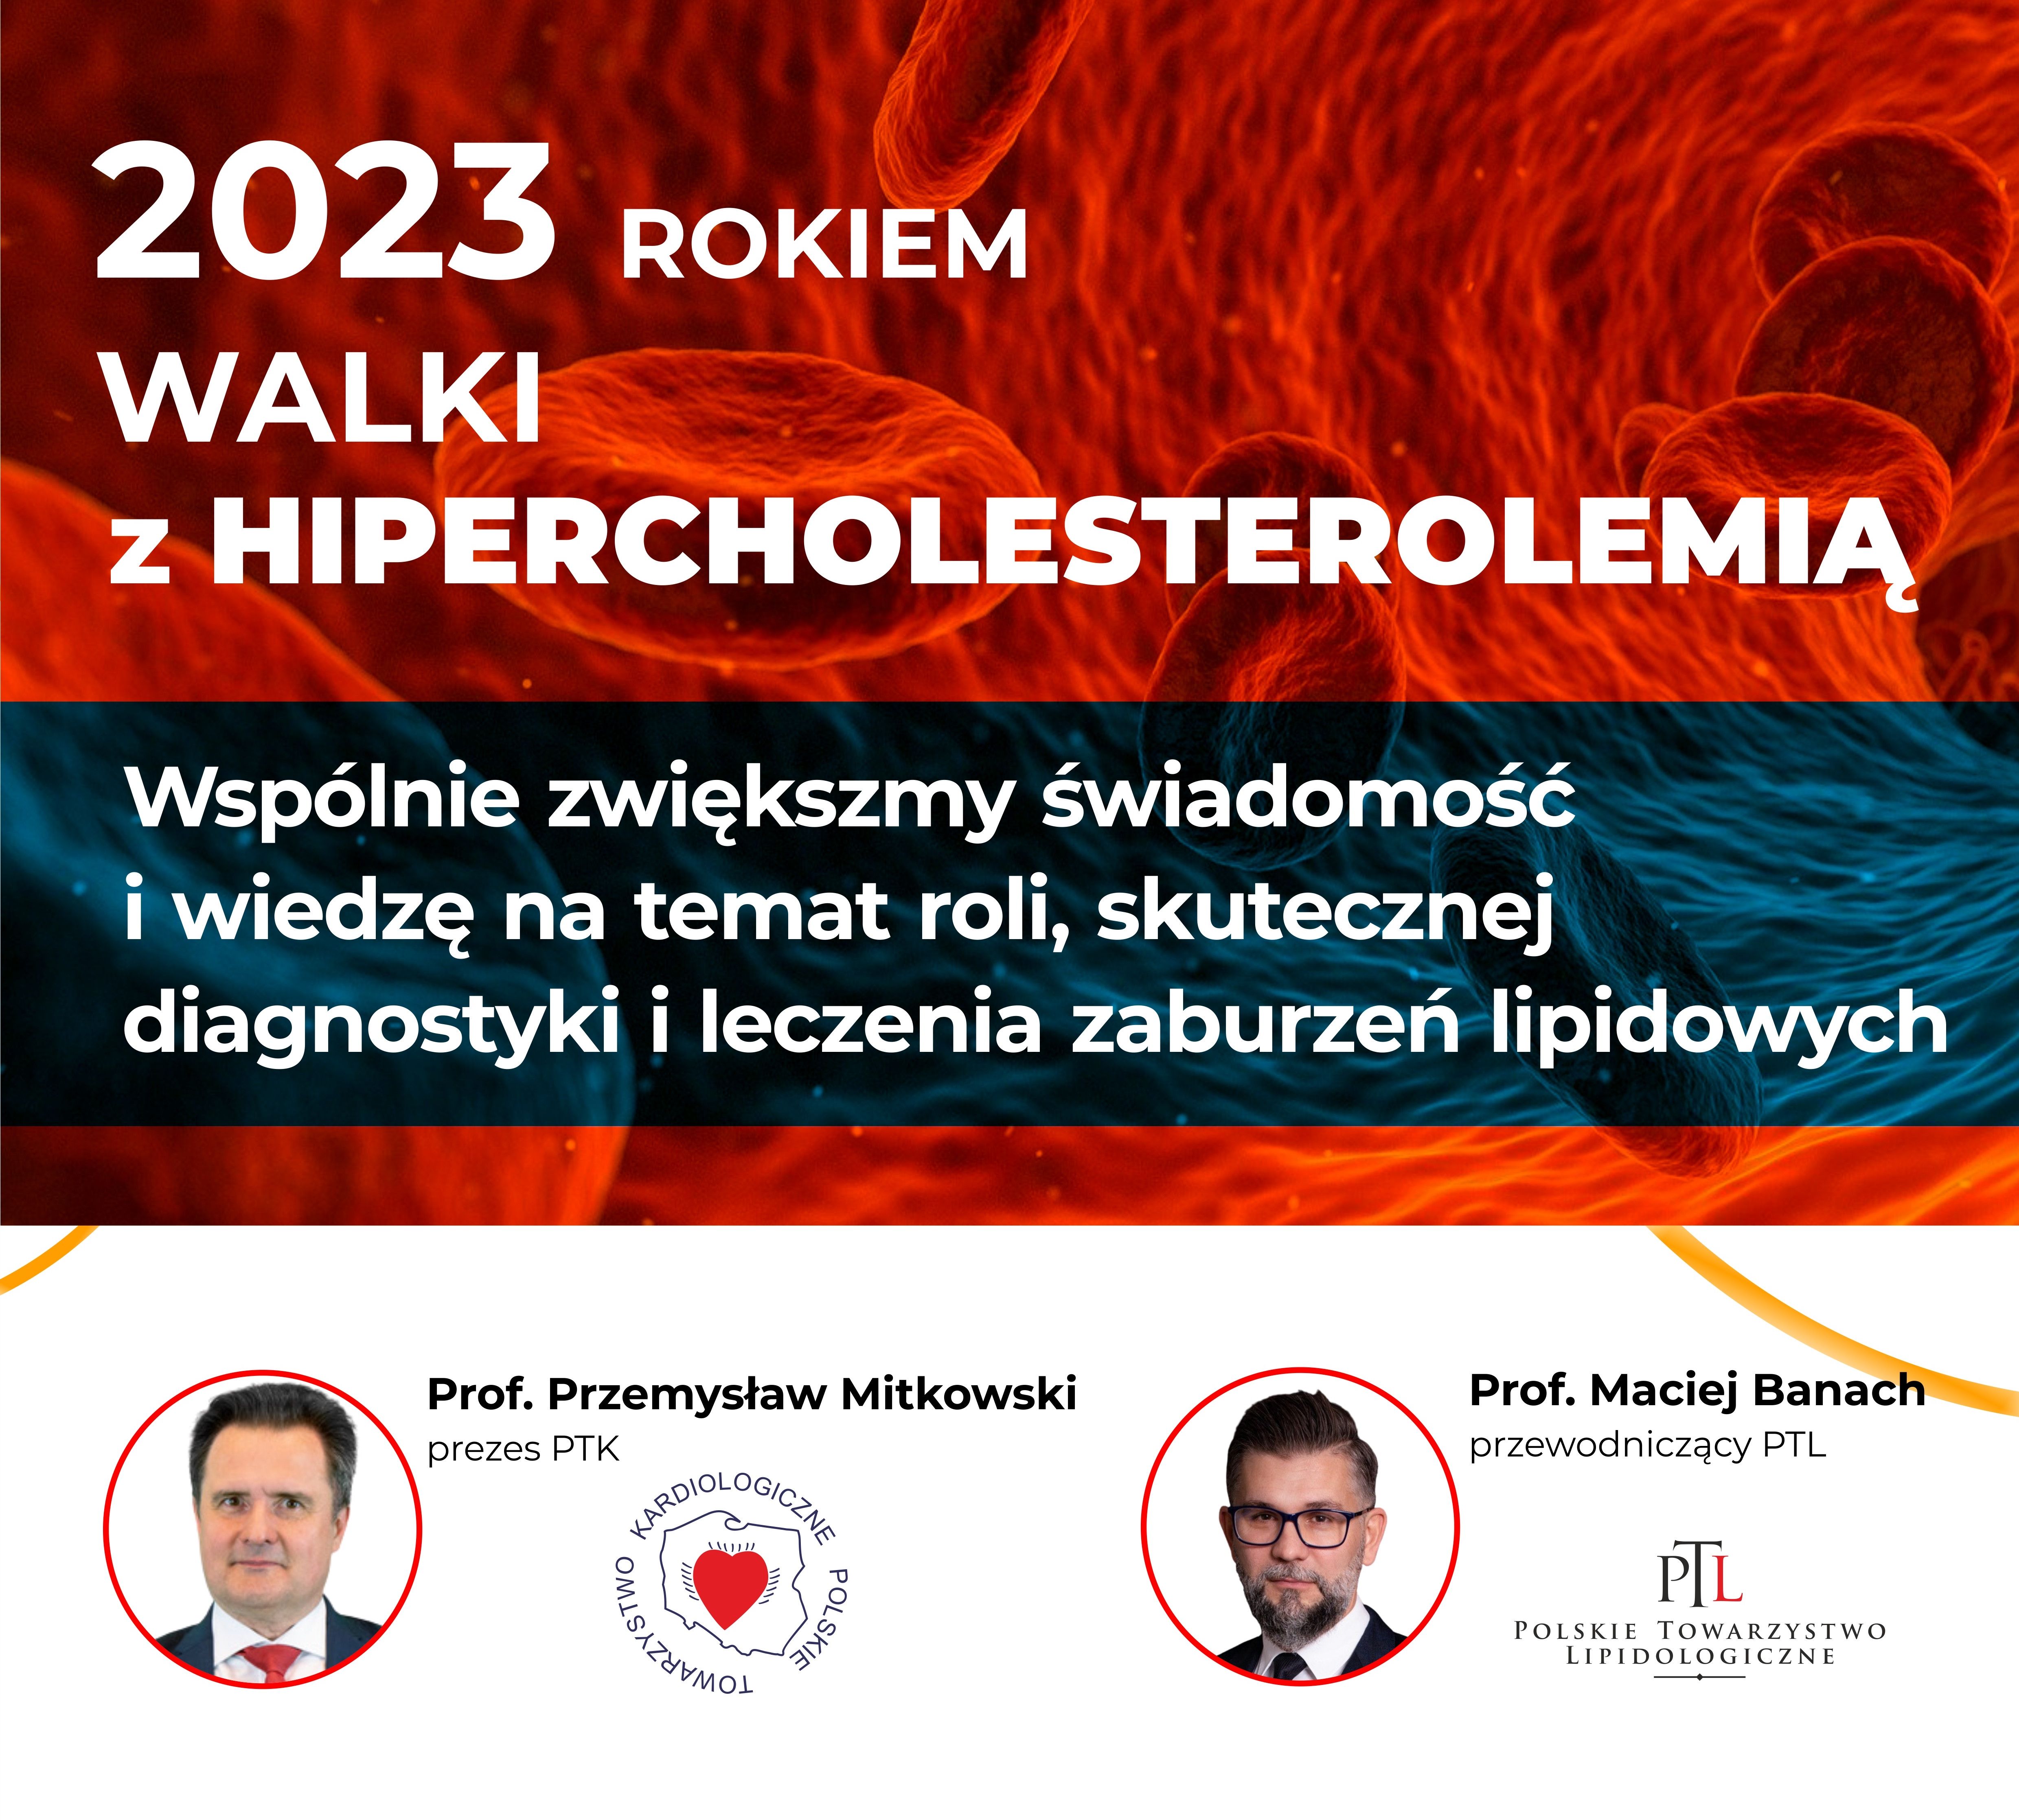 2023 Rokiem Walki z Hipercholesterolemią!